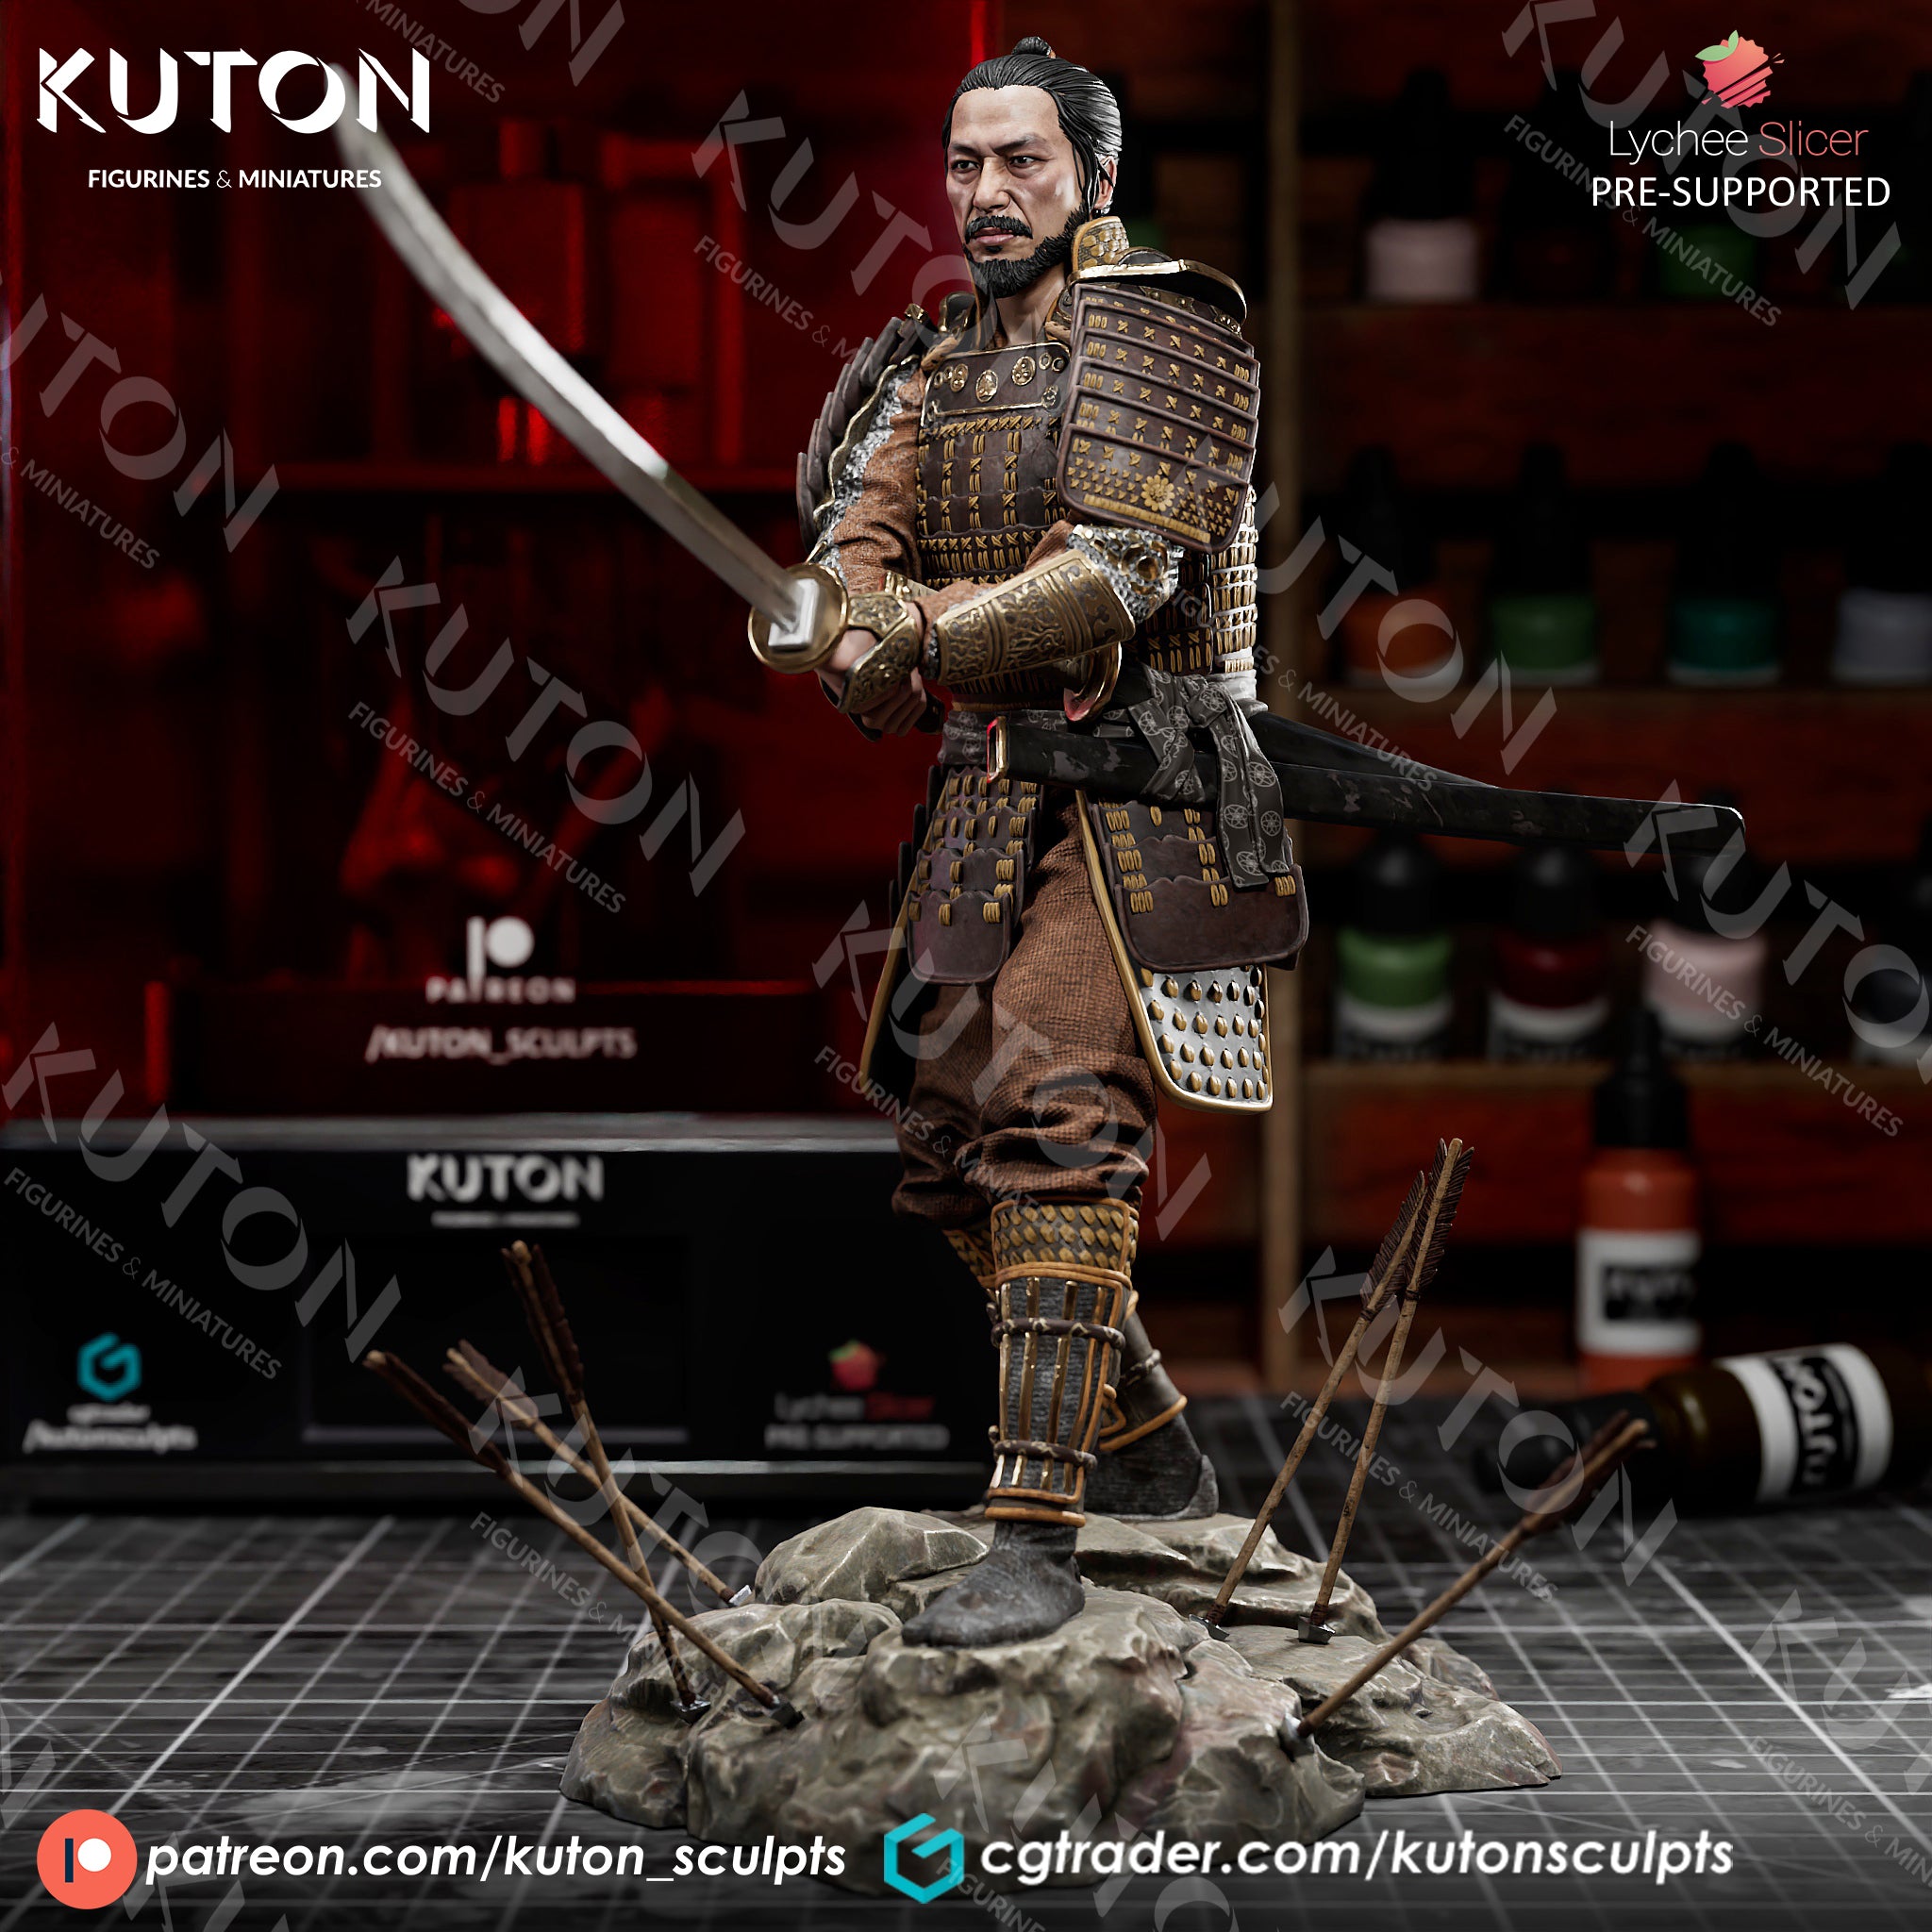 Yoshii Toranaga (Samurai) 3D Printed model 236mm (1/9 scale) - Fan Art